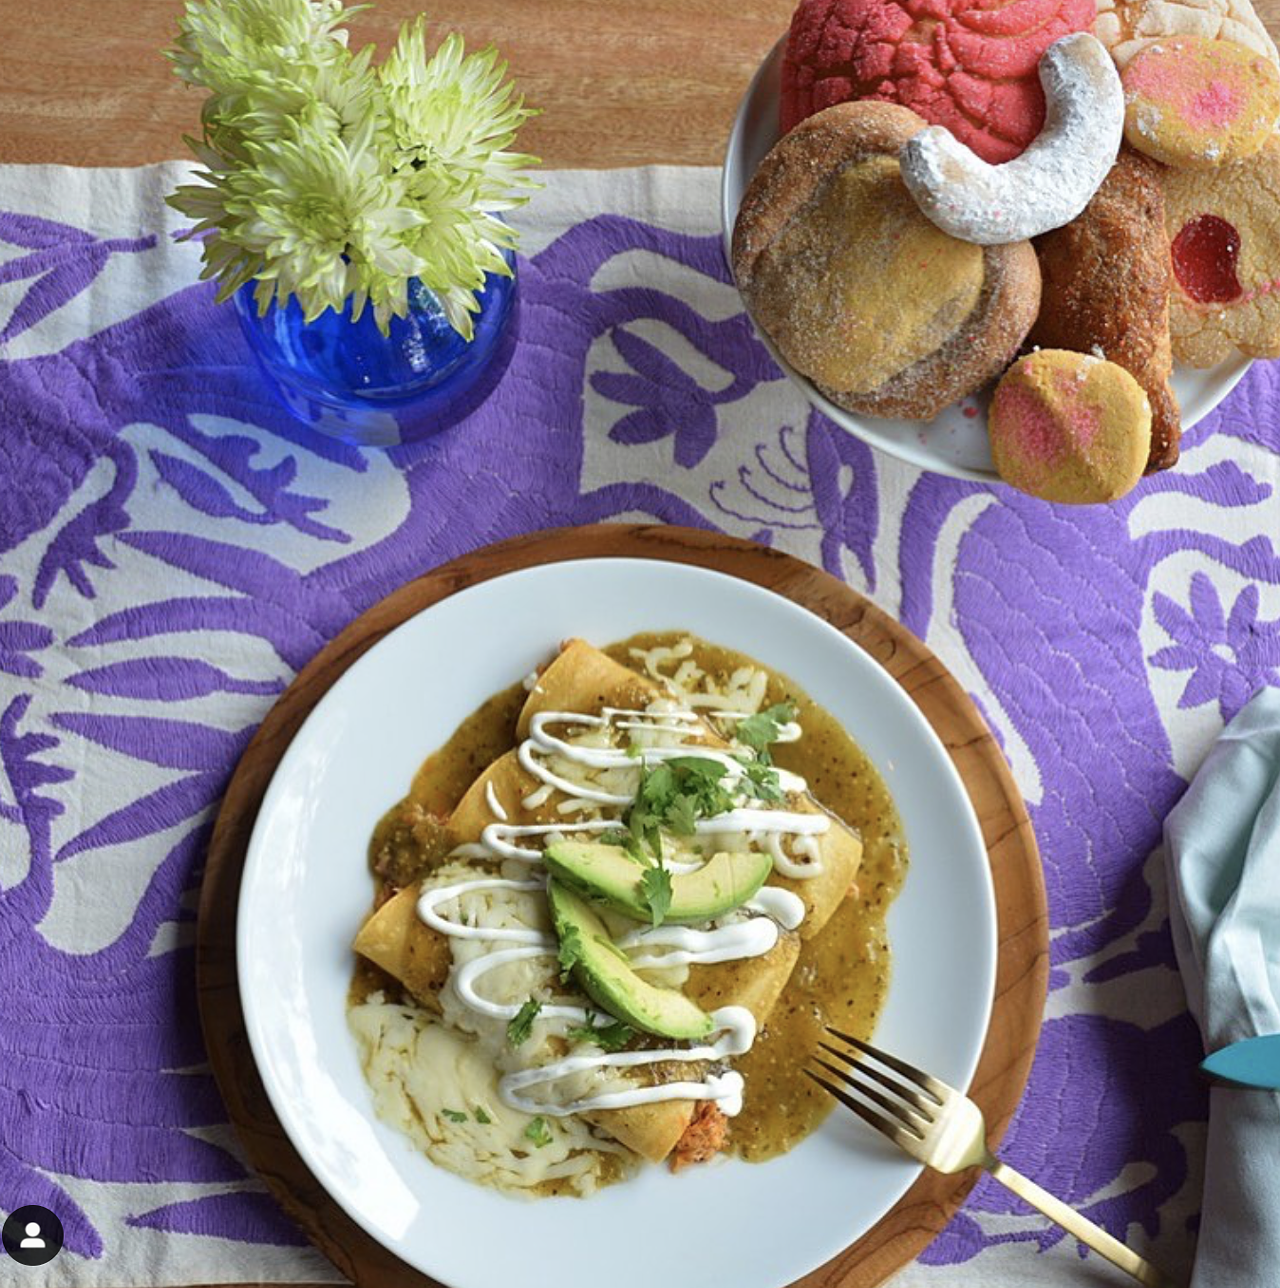 Mi Tierra Enchiladas Verdes
Chef Cariño Cortez of San Antonio's famous Mi Tierra Café shares her family's authentic Enchiladas Verdes recipe.
Find the recipe here.
Photo via Instagram /  purepalated